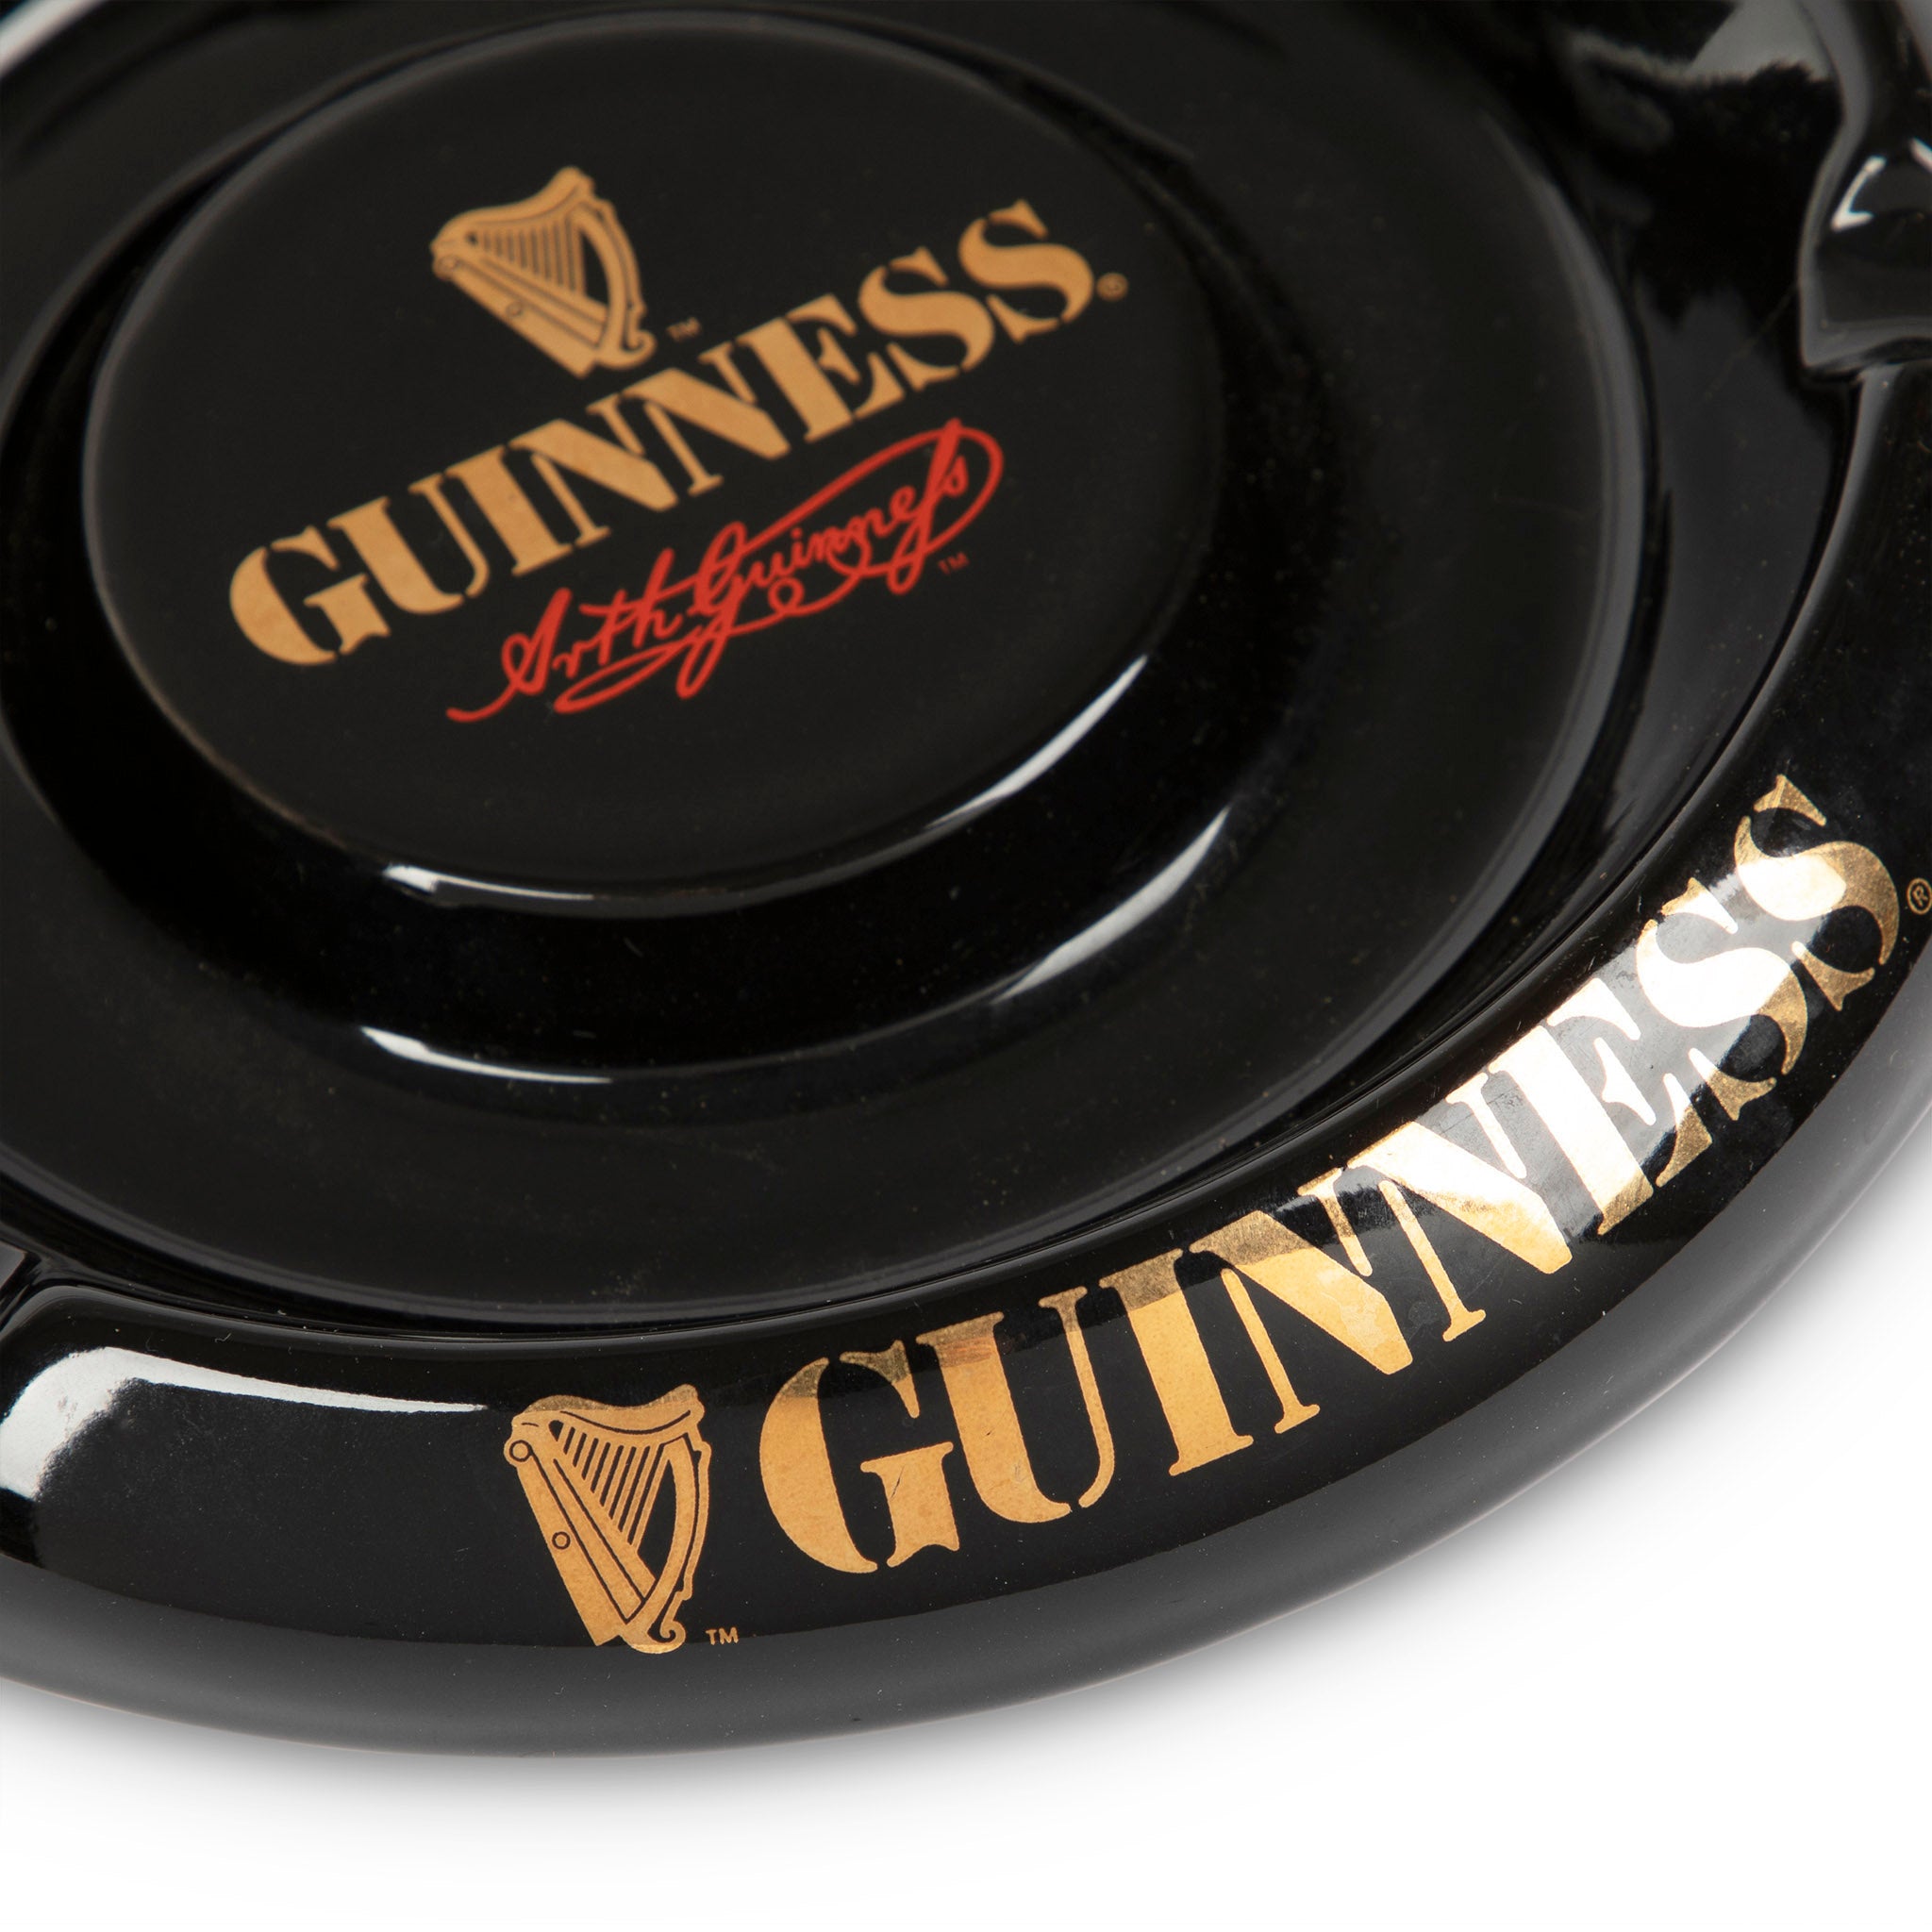 Vintage Guinness Round Ashtray